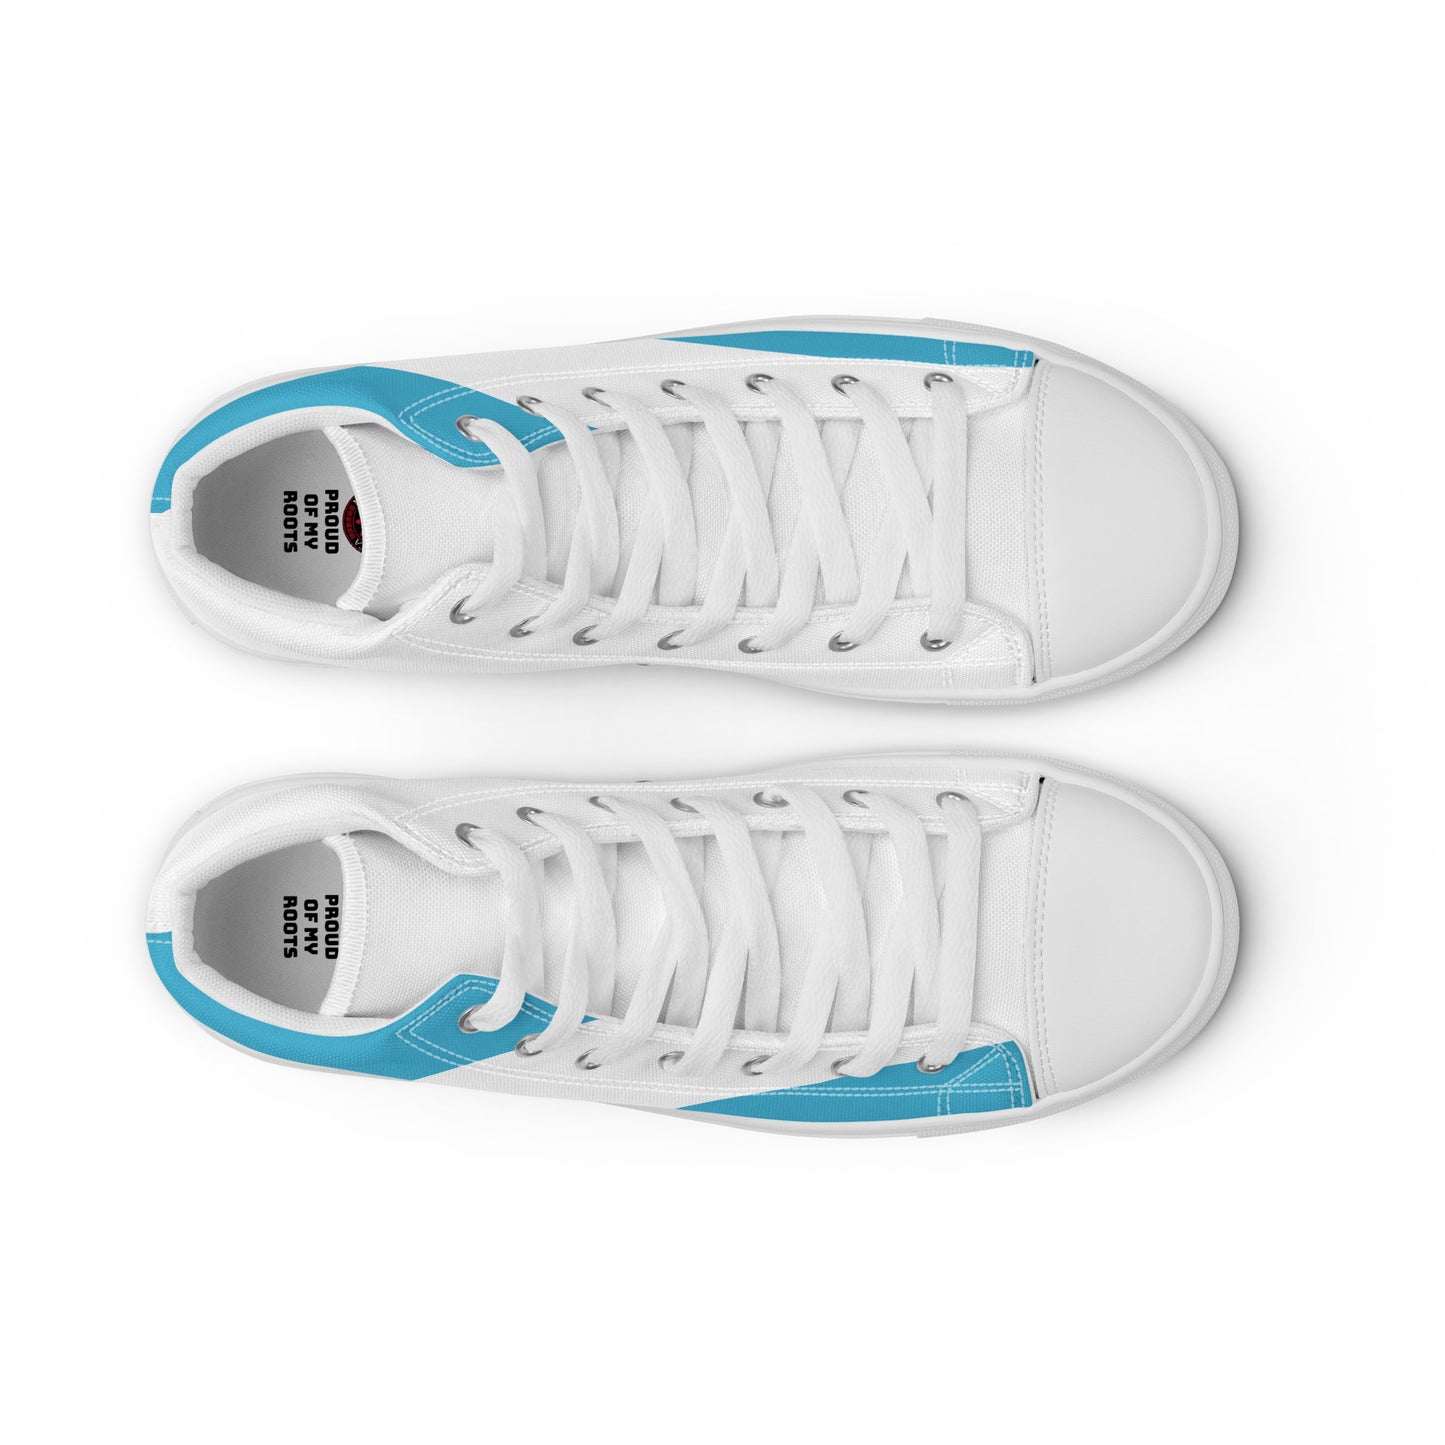 Honduras - Men - Bandera - High top shoes